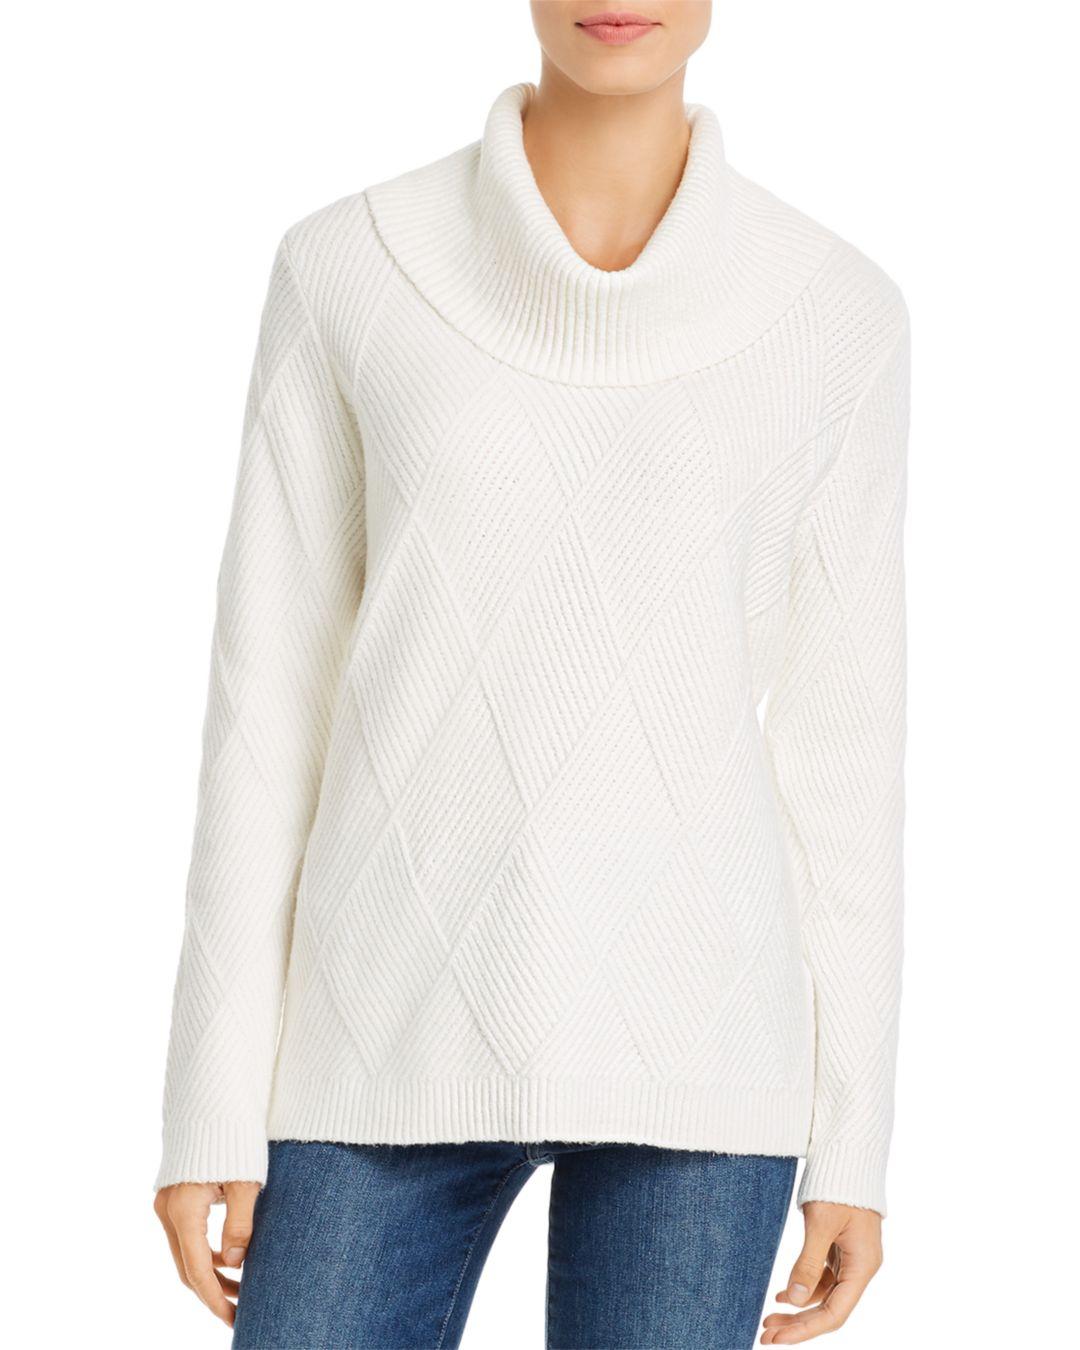 Calvin Klein Cotton Diamond Stitched Cowl Neck Sweater in White - Lyst